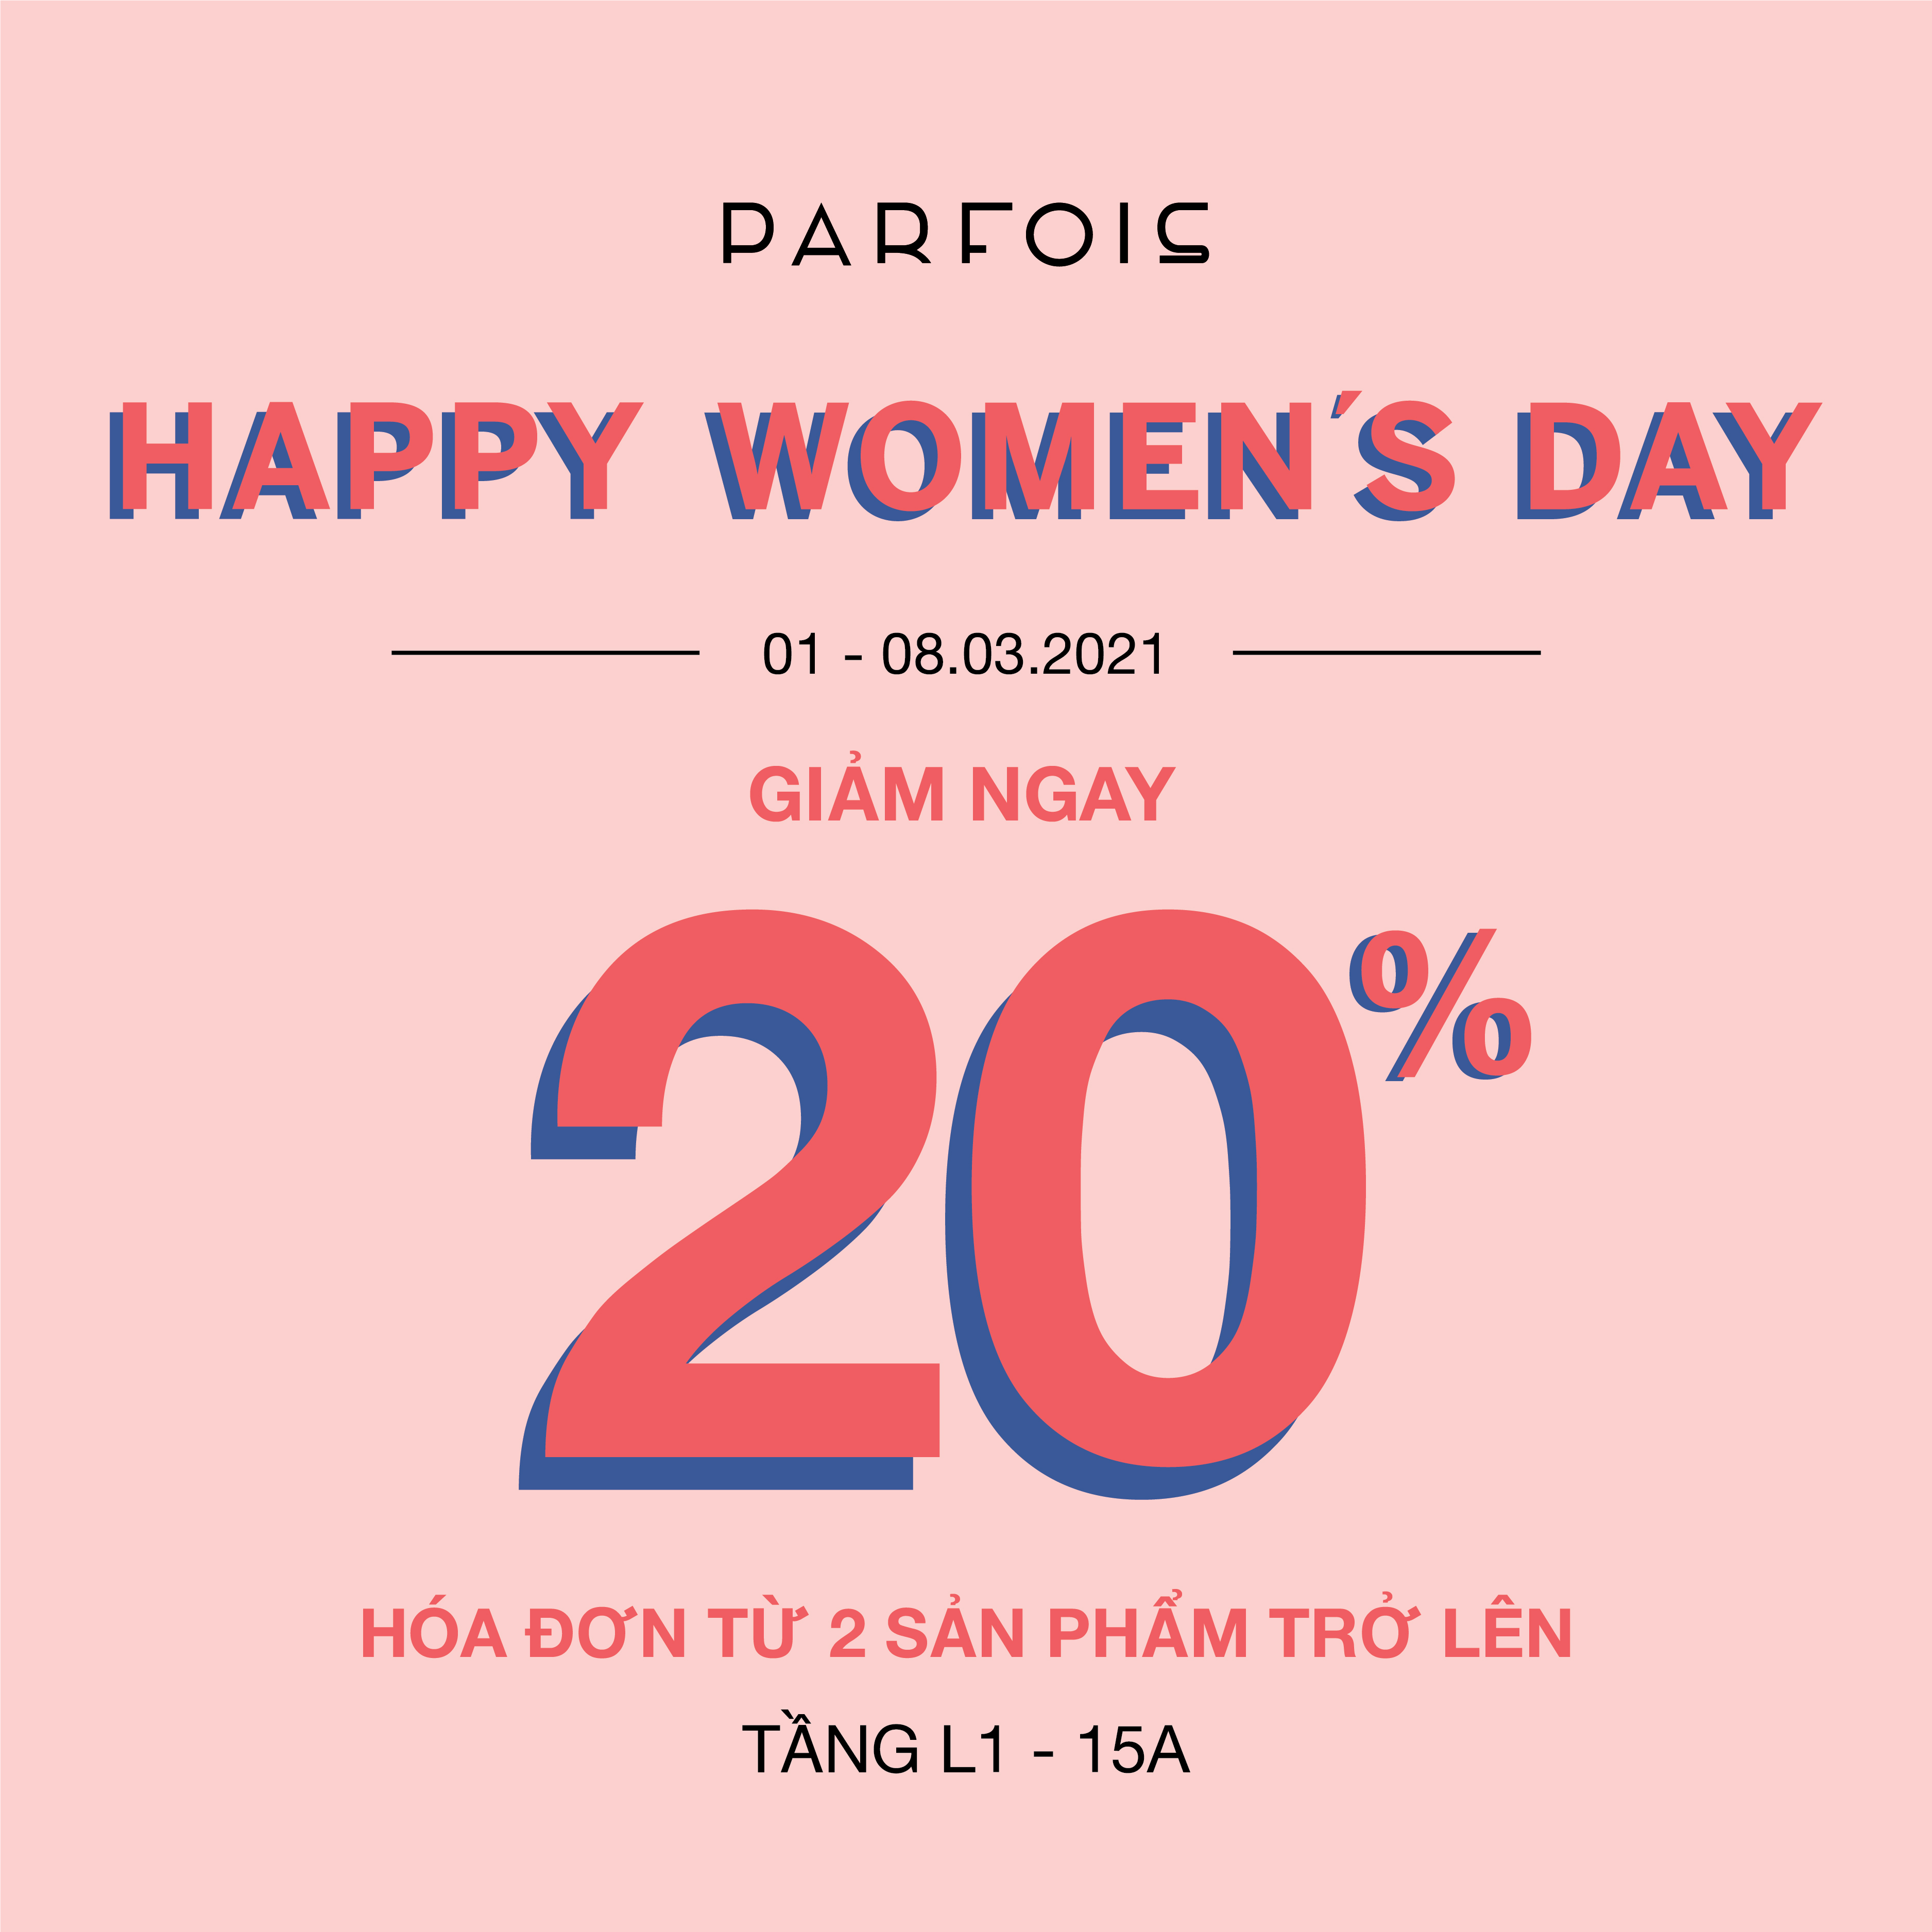 PARFOIS HAPPY WOMEN'S DAY 👱